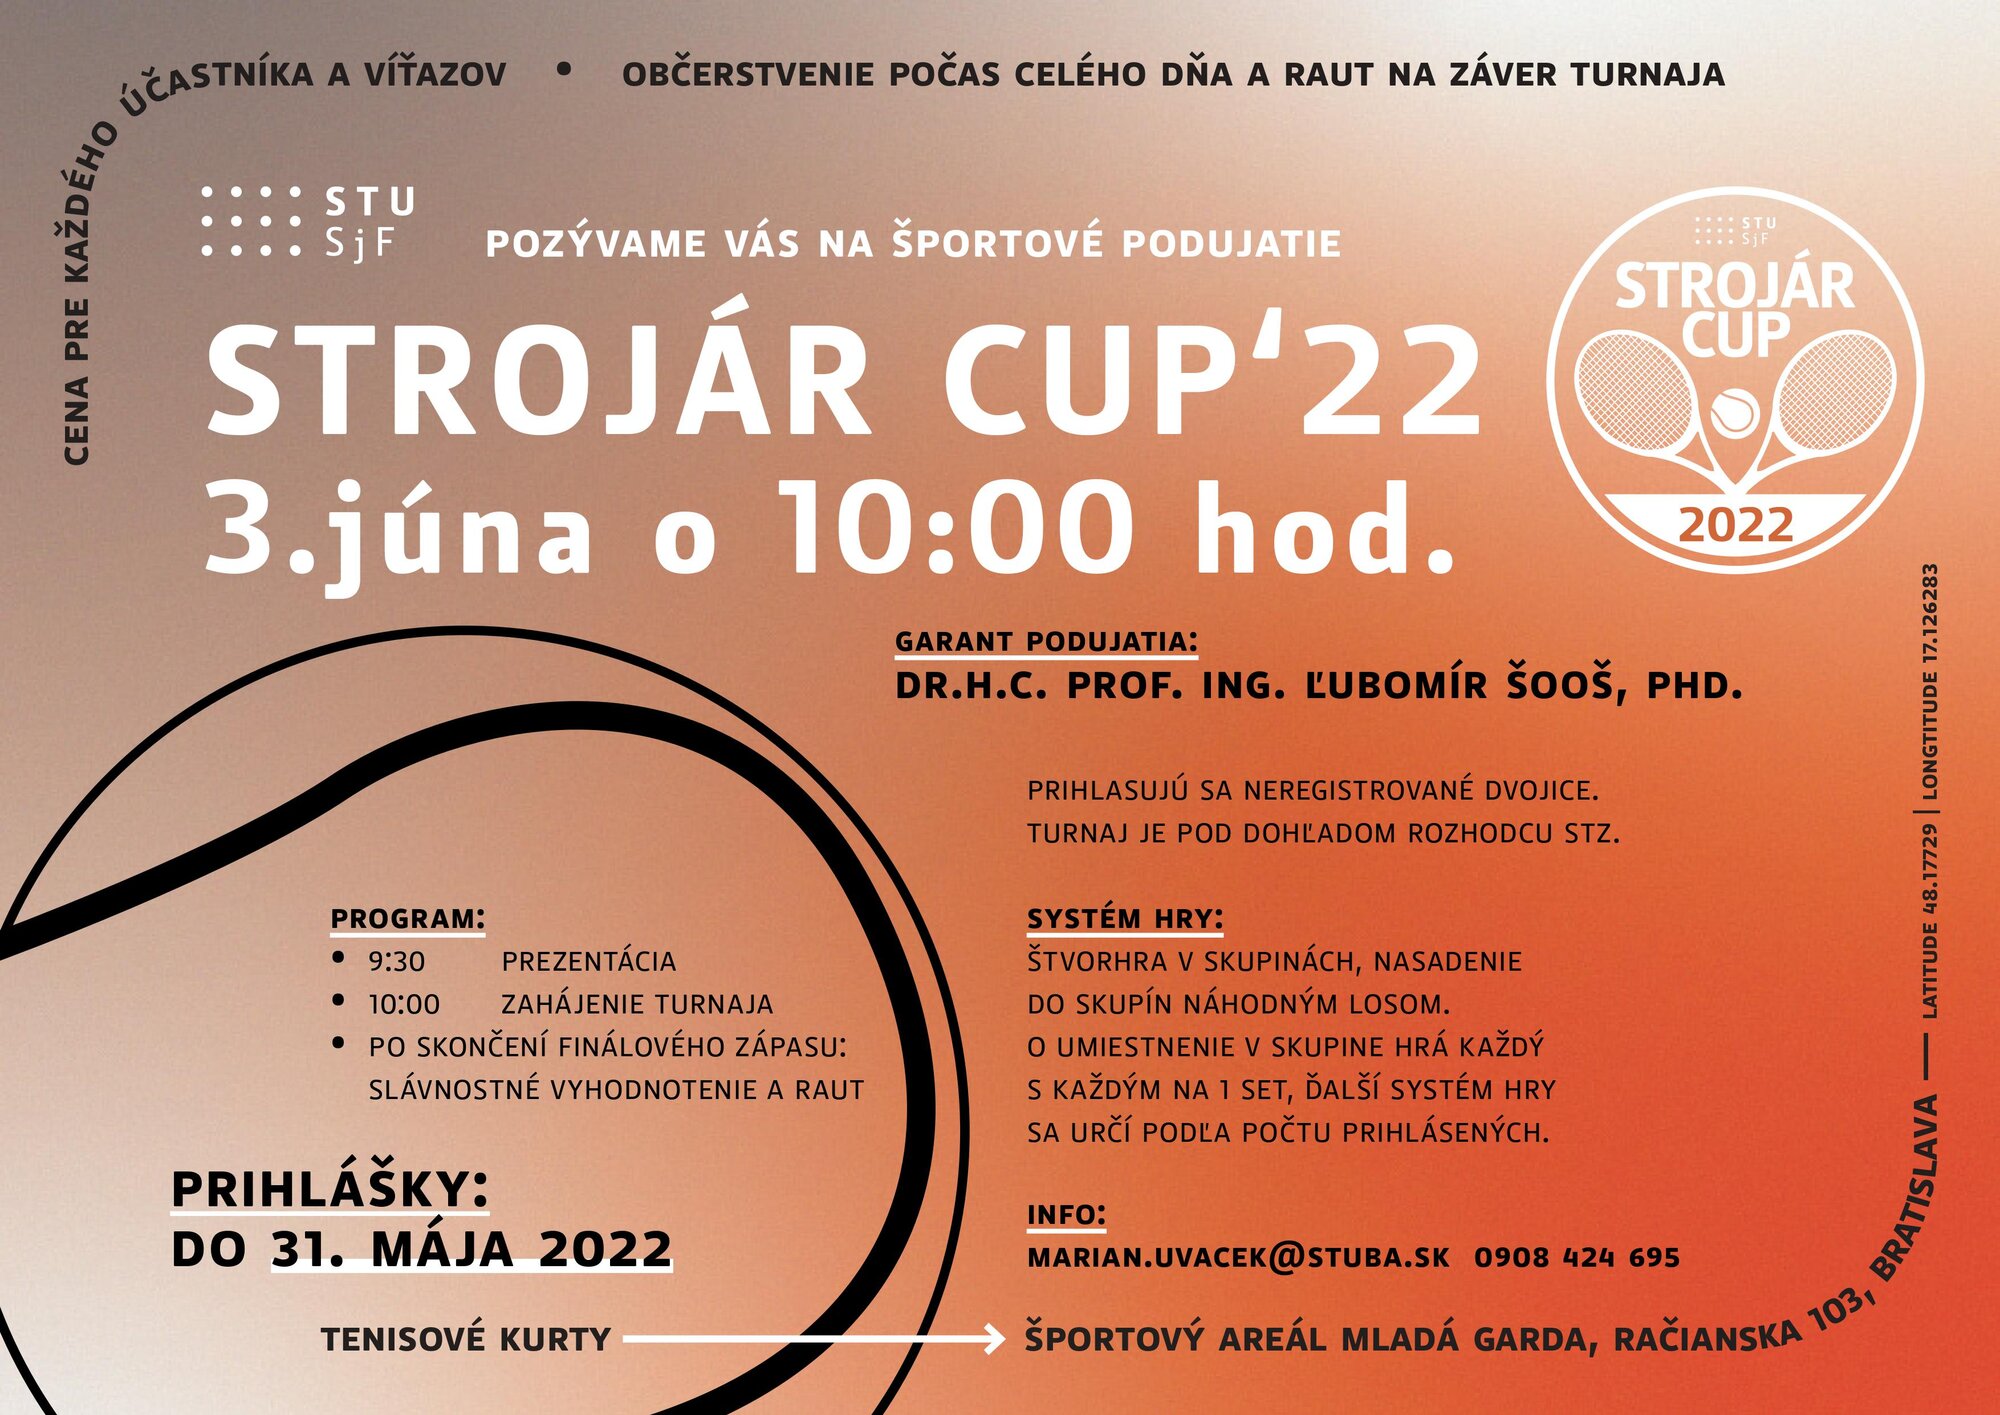 StrojarCup 2022